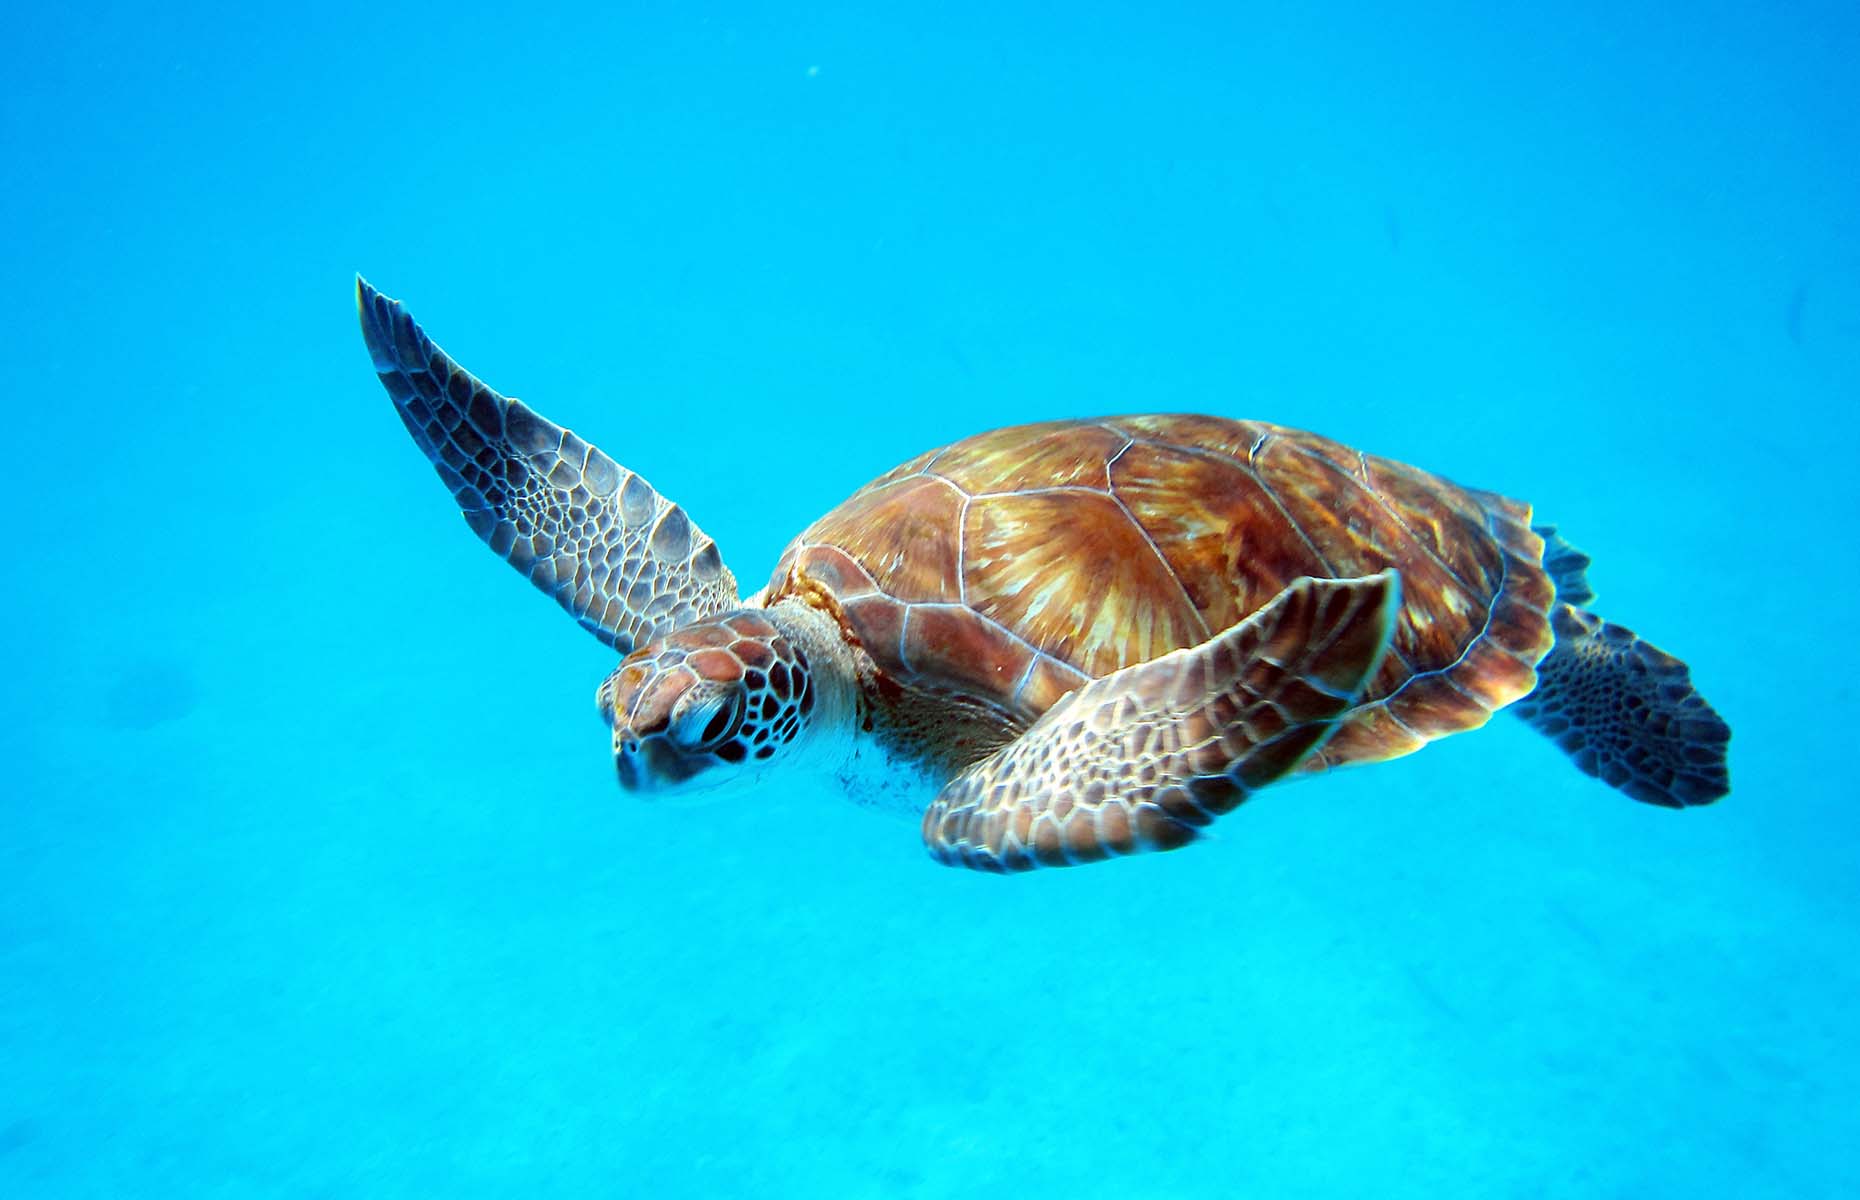 Sea turtles in Barbados. (Image: Steven M Lang/Shutterstock)